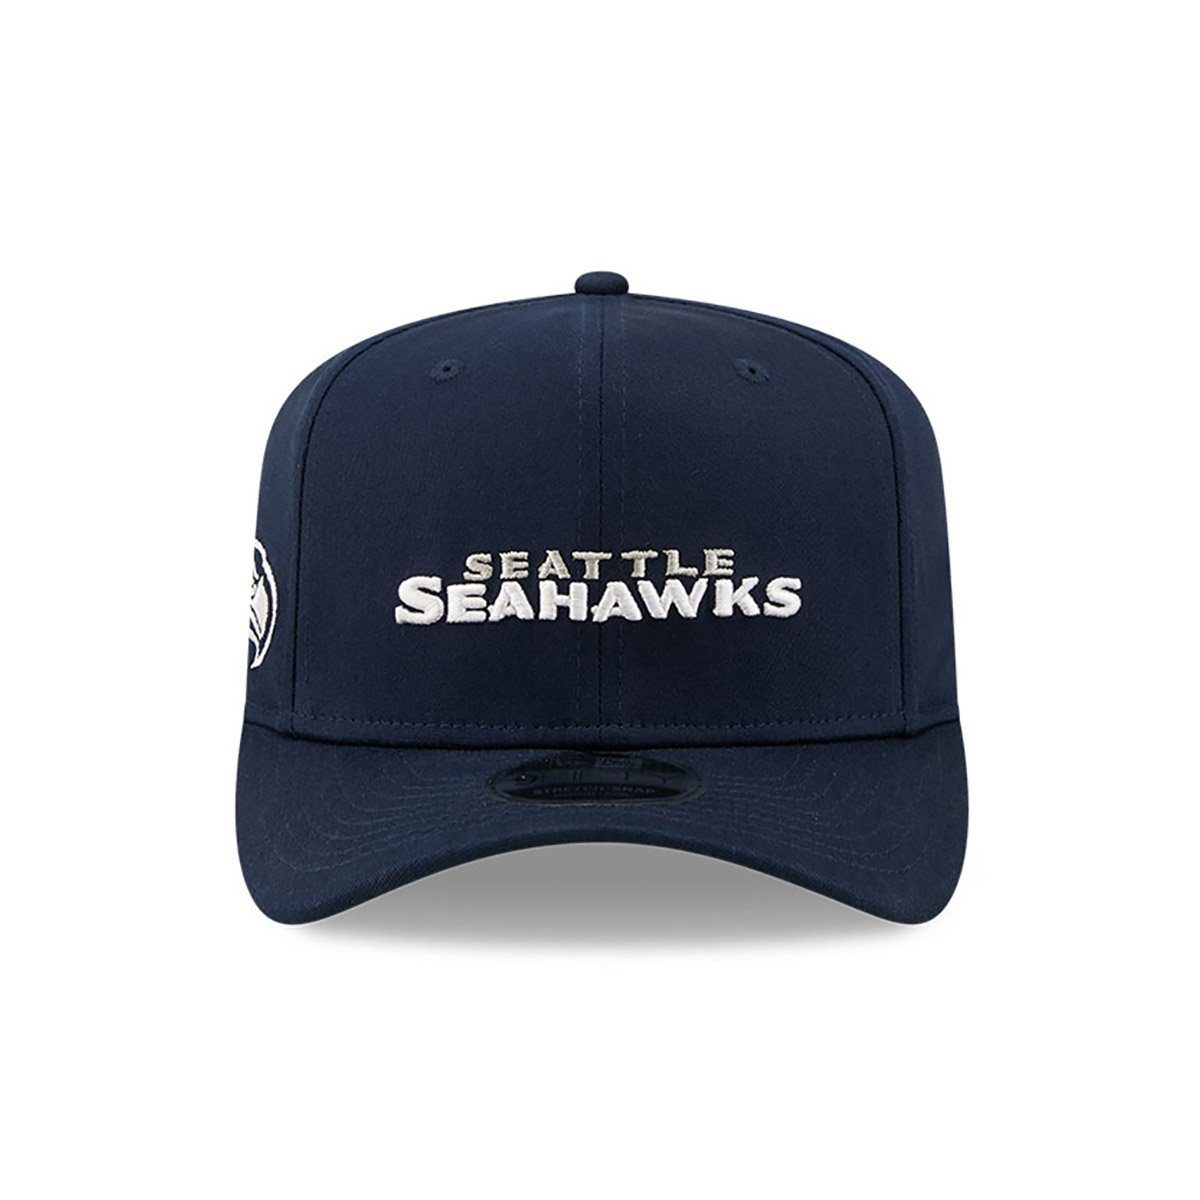 Team Era Seahawks Wordmark Cap New navy Cap Baseball New 9FIFTY Era Seattle NFL22